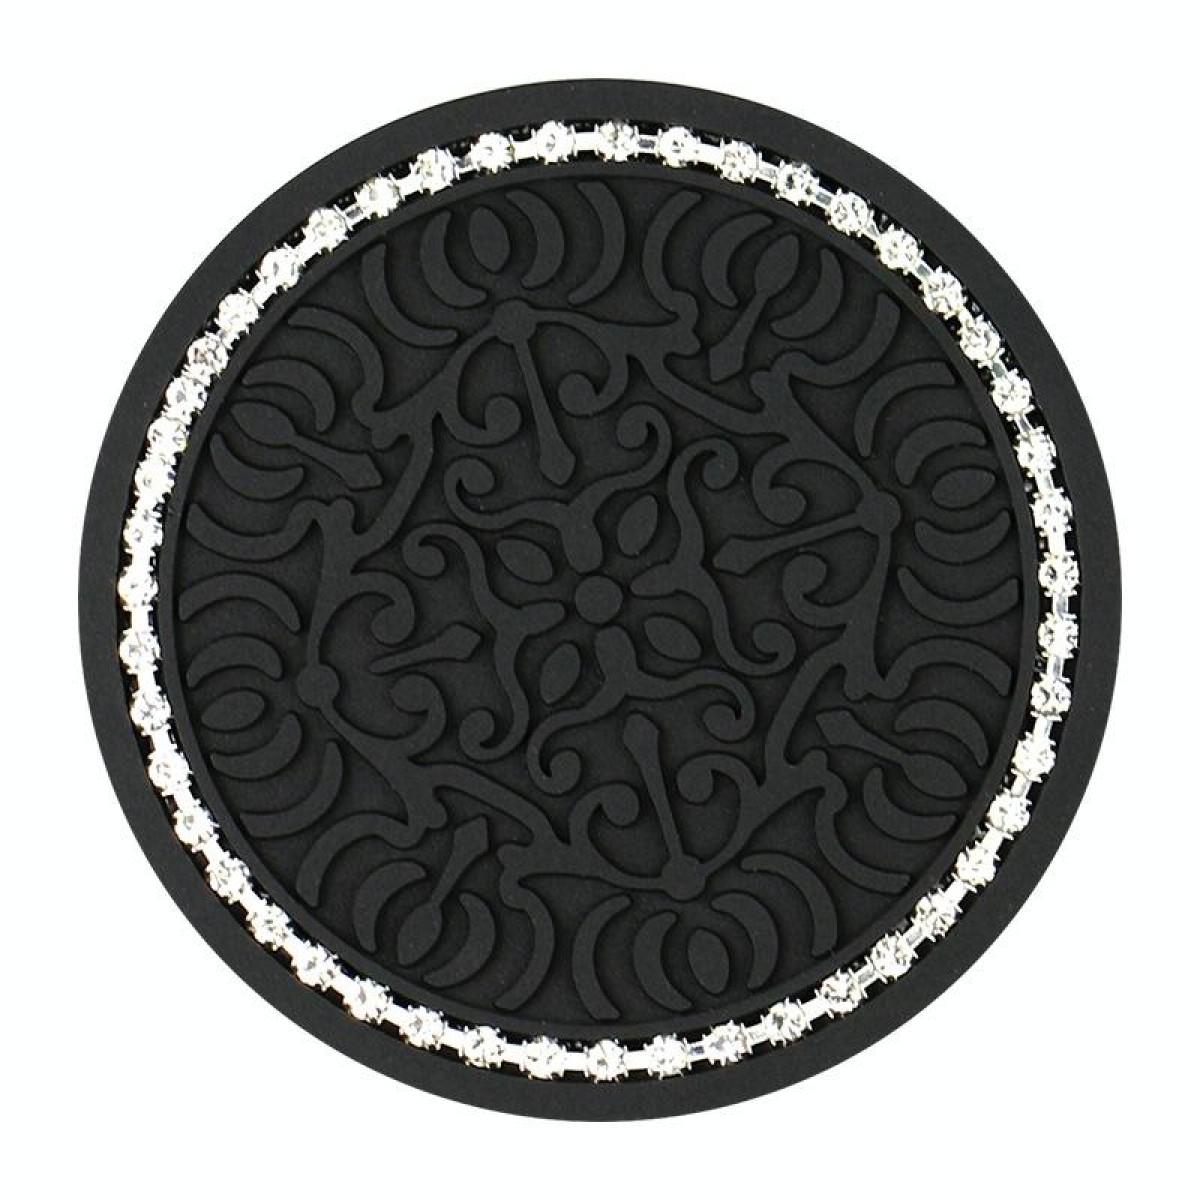 Totem Stripe Car Coaster Storage Non-Slip Insulating Mat, Color: Black White Diamond